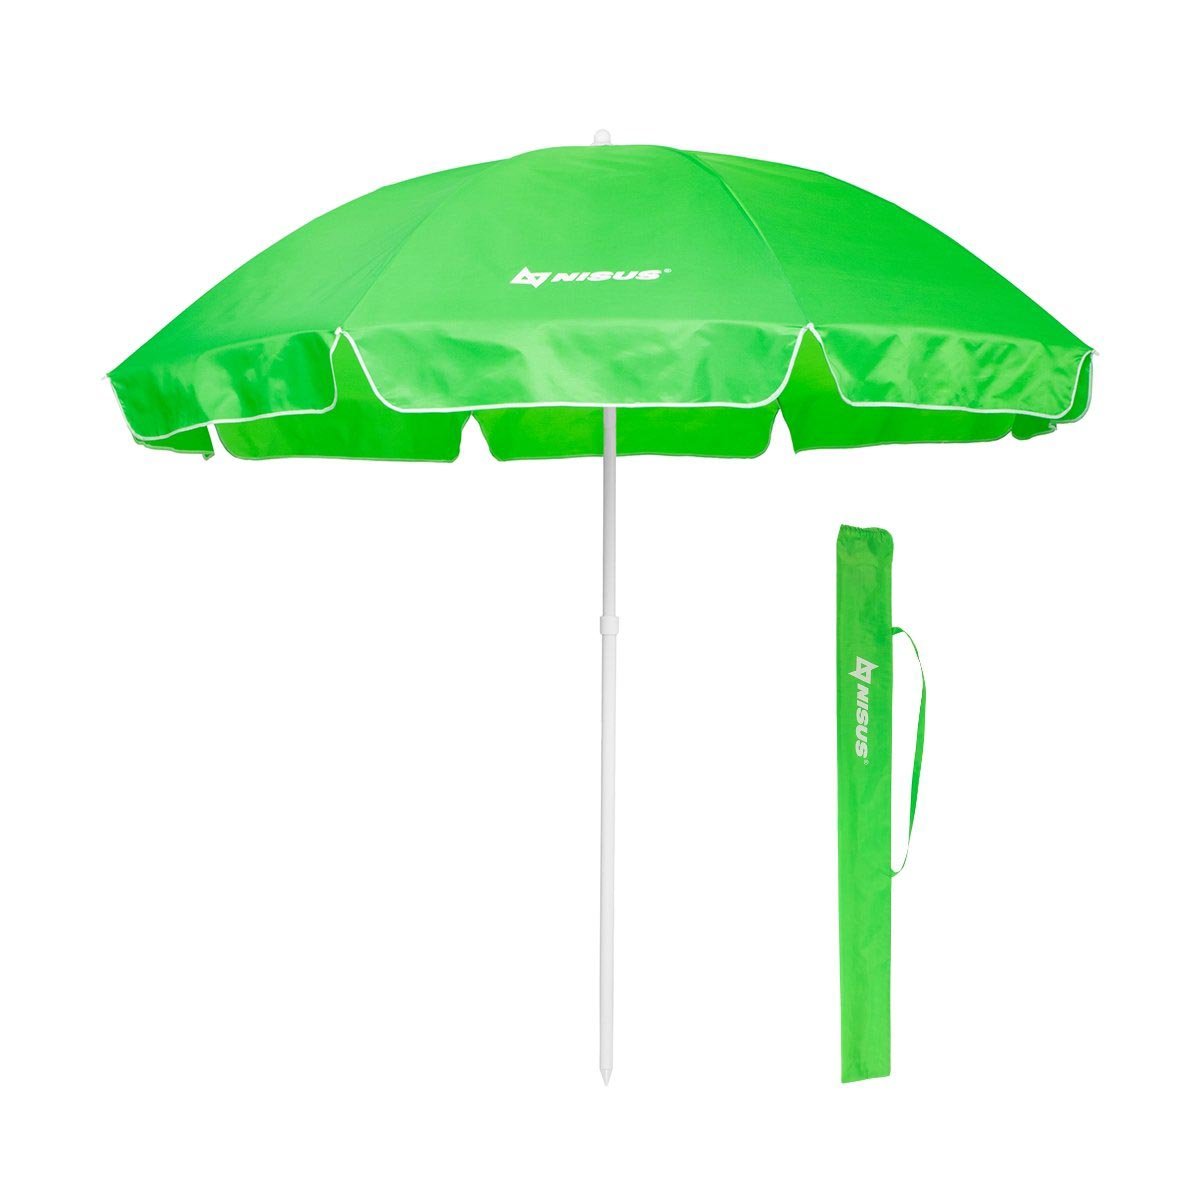 5, 6 ft Green Folding Beach Umbrella with Carry Bag